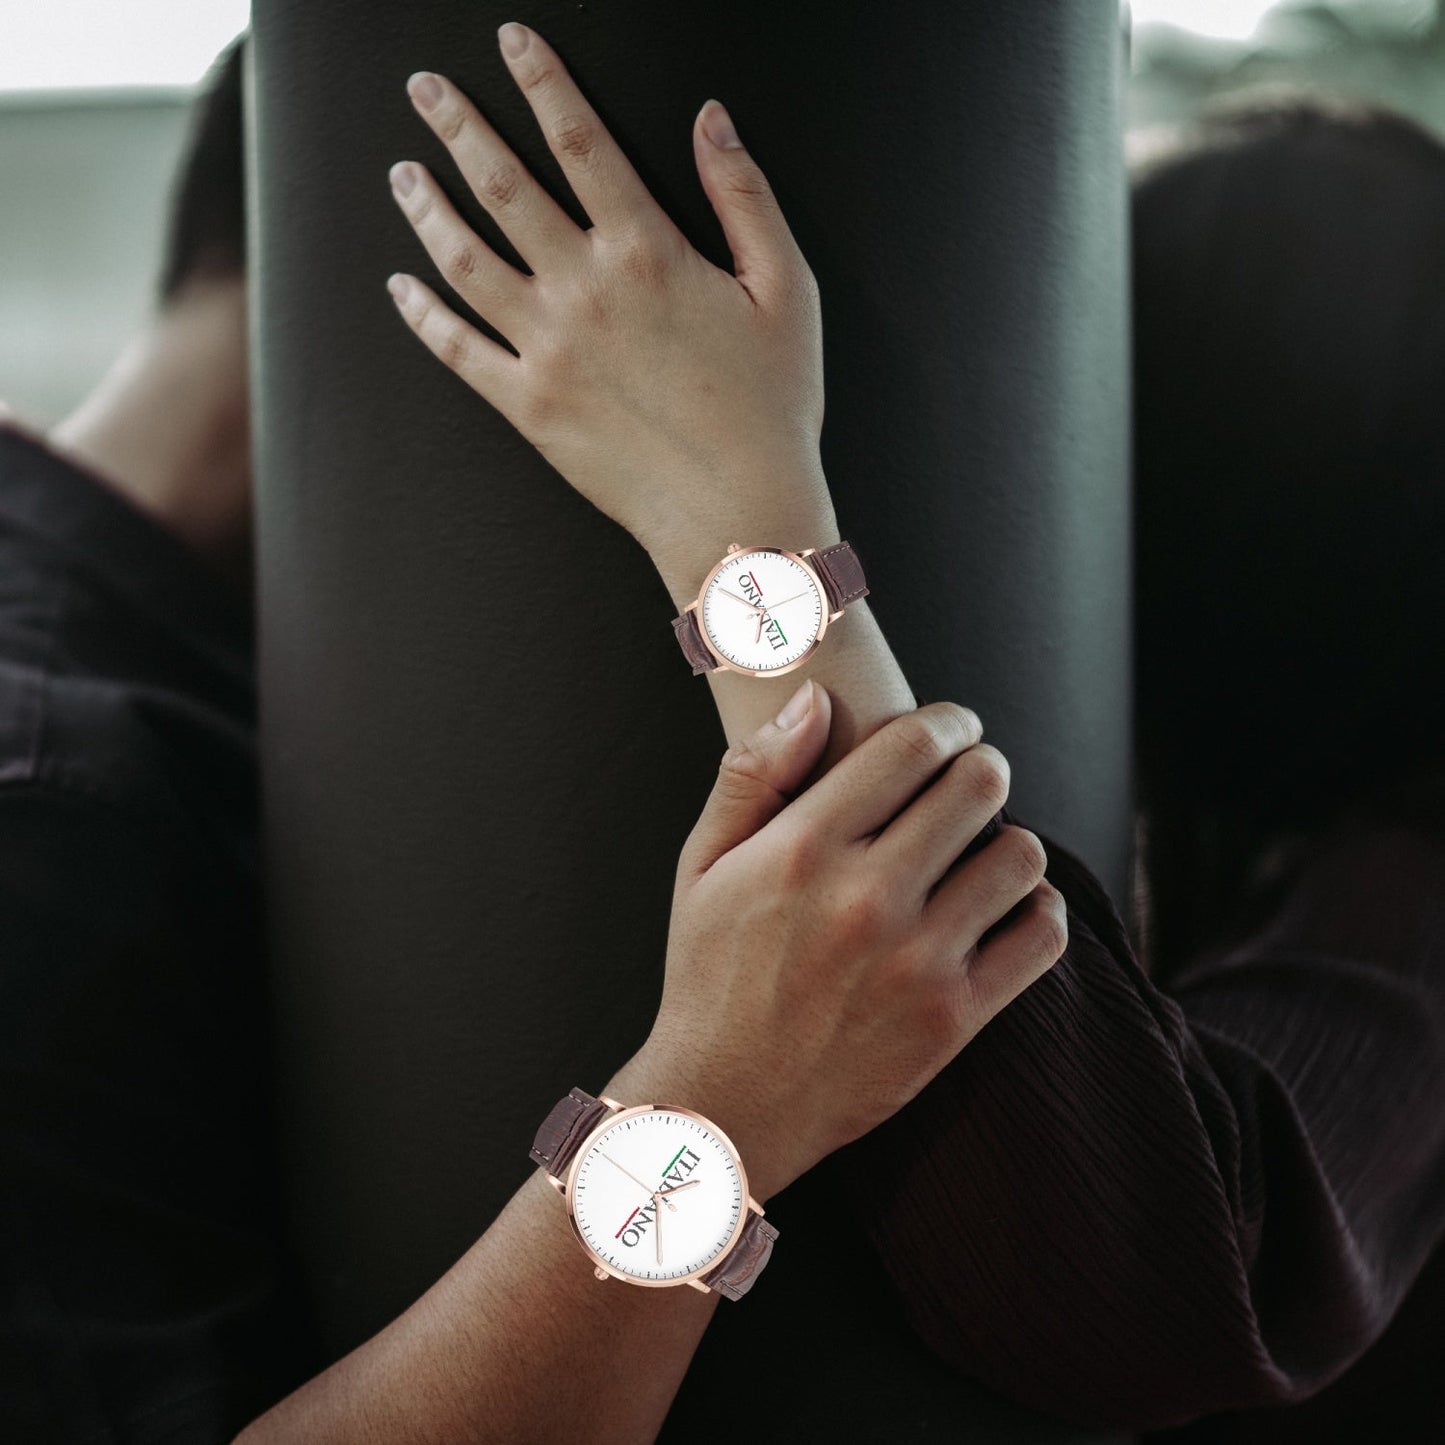 Ultra-thin Premium SEIKO Quartz watch Movement - ITALIANO